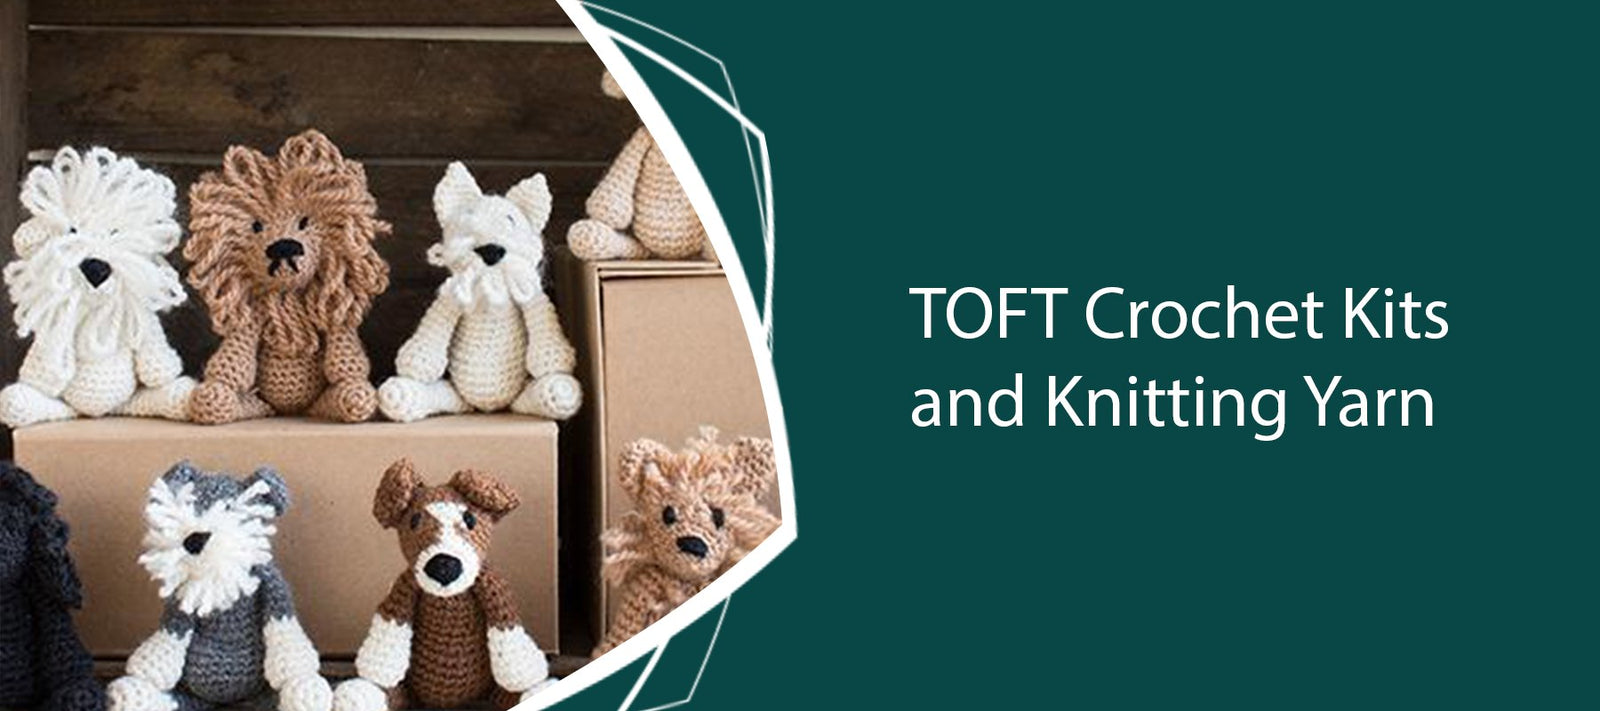 TOFT Crochet Kits Level 1